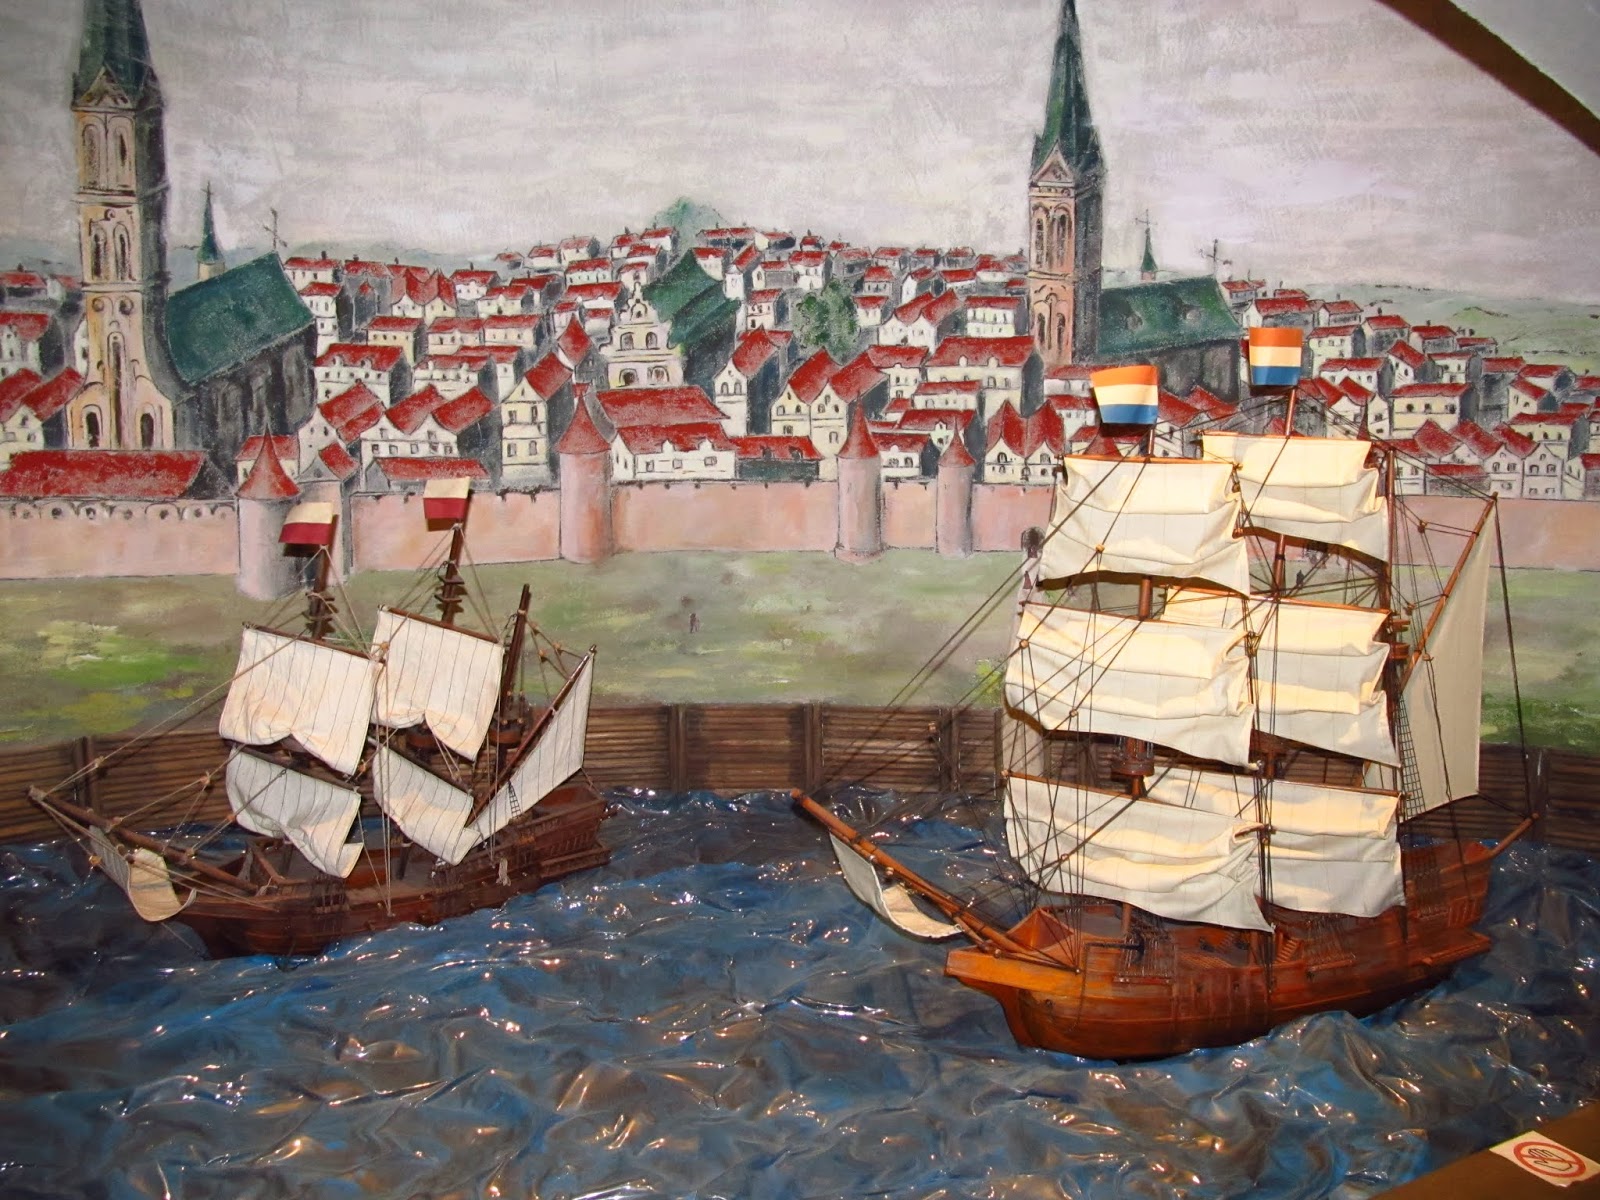 Capital Marine Modellers' Guild: Latvia war museum - boats